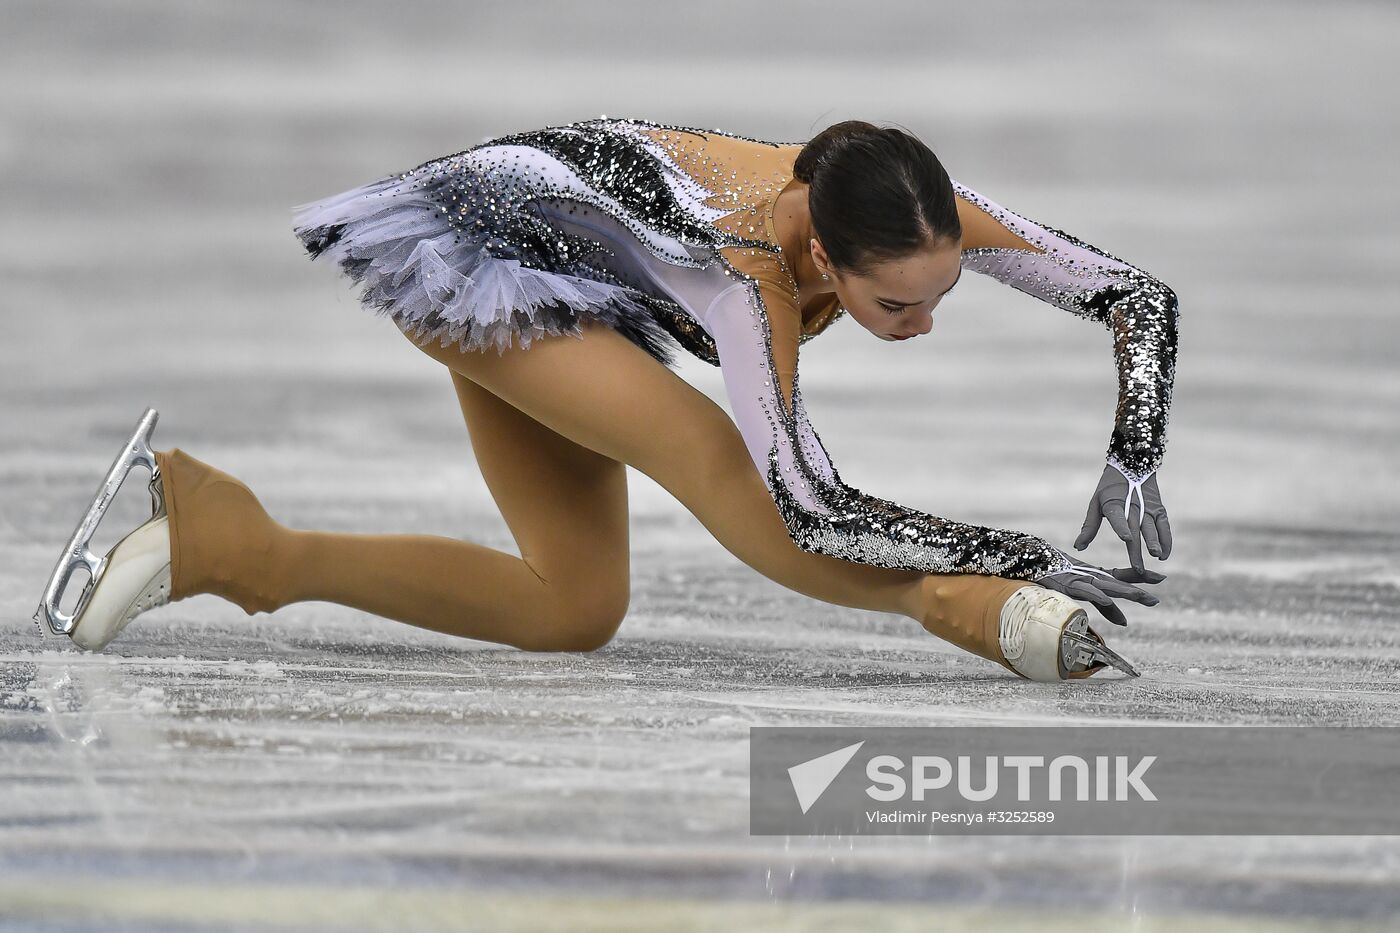 ISU Grand Prix of Figure Skating Final. Women's short program